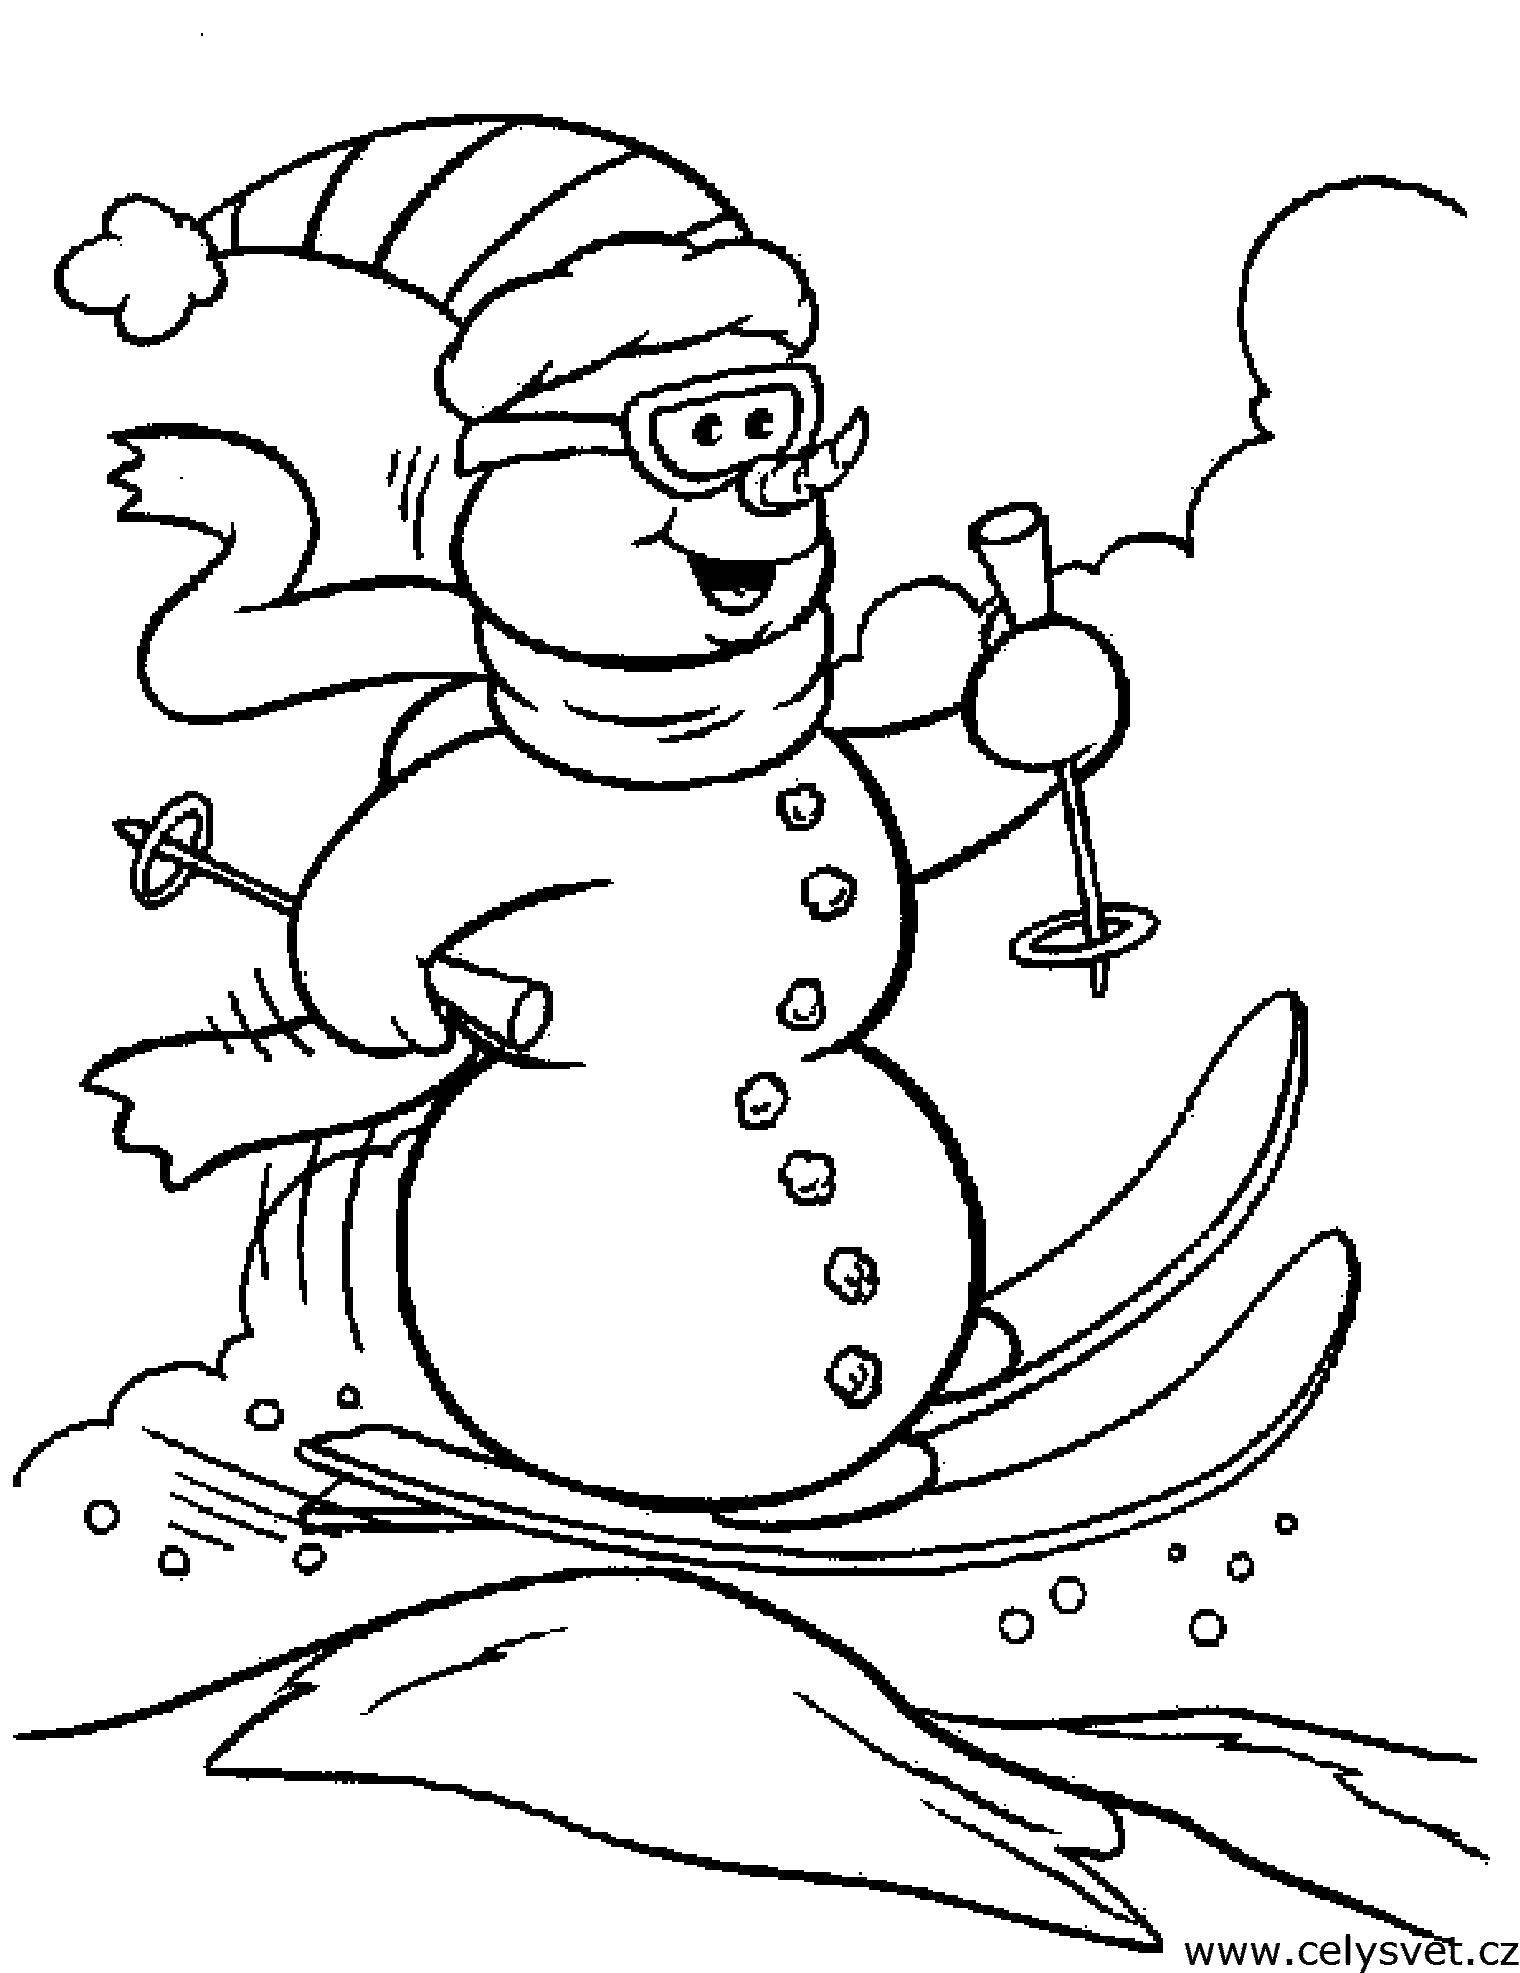 Название: Раскраска Снеговик. Категория: снеговик. Теги: снеговик, лыжи.